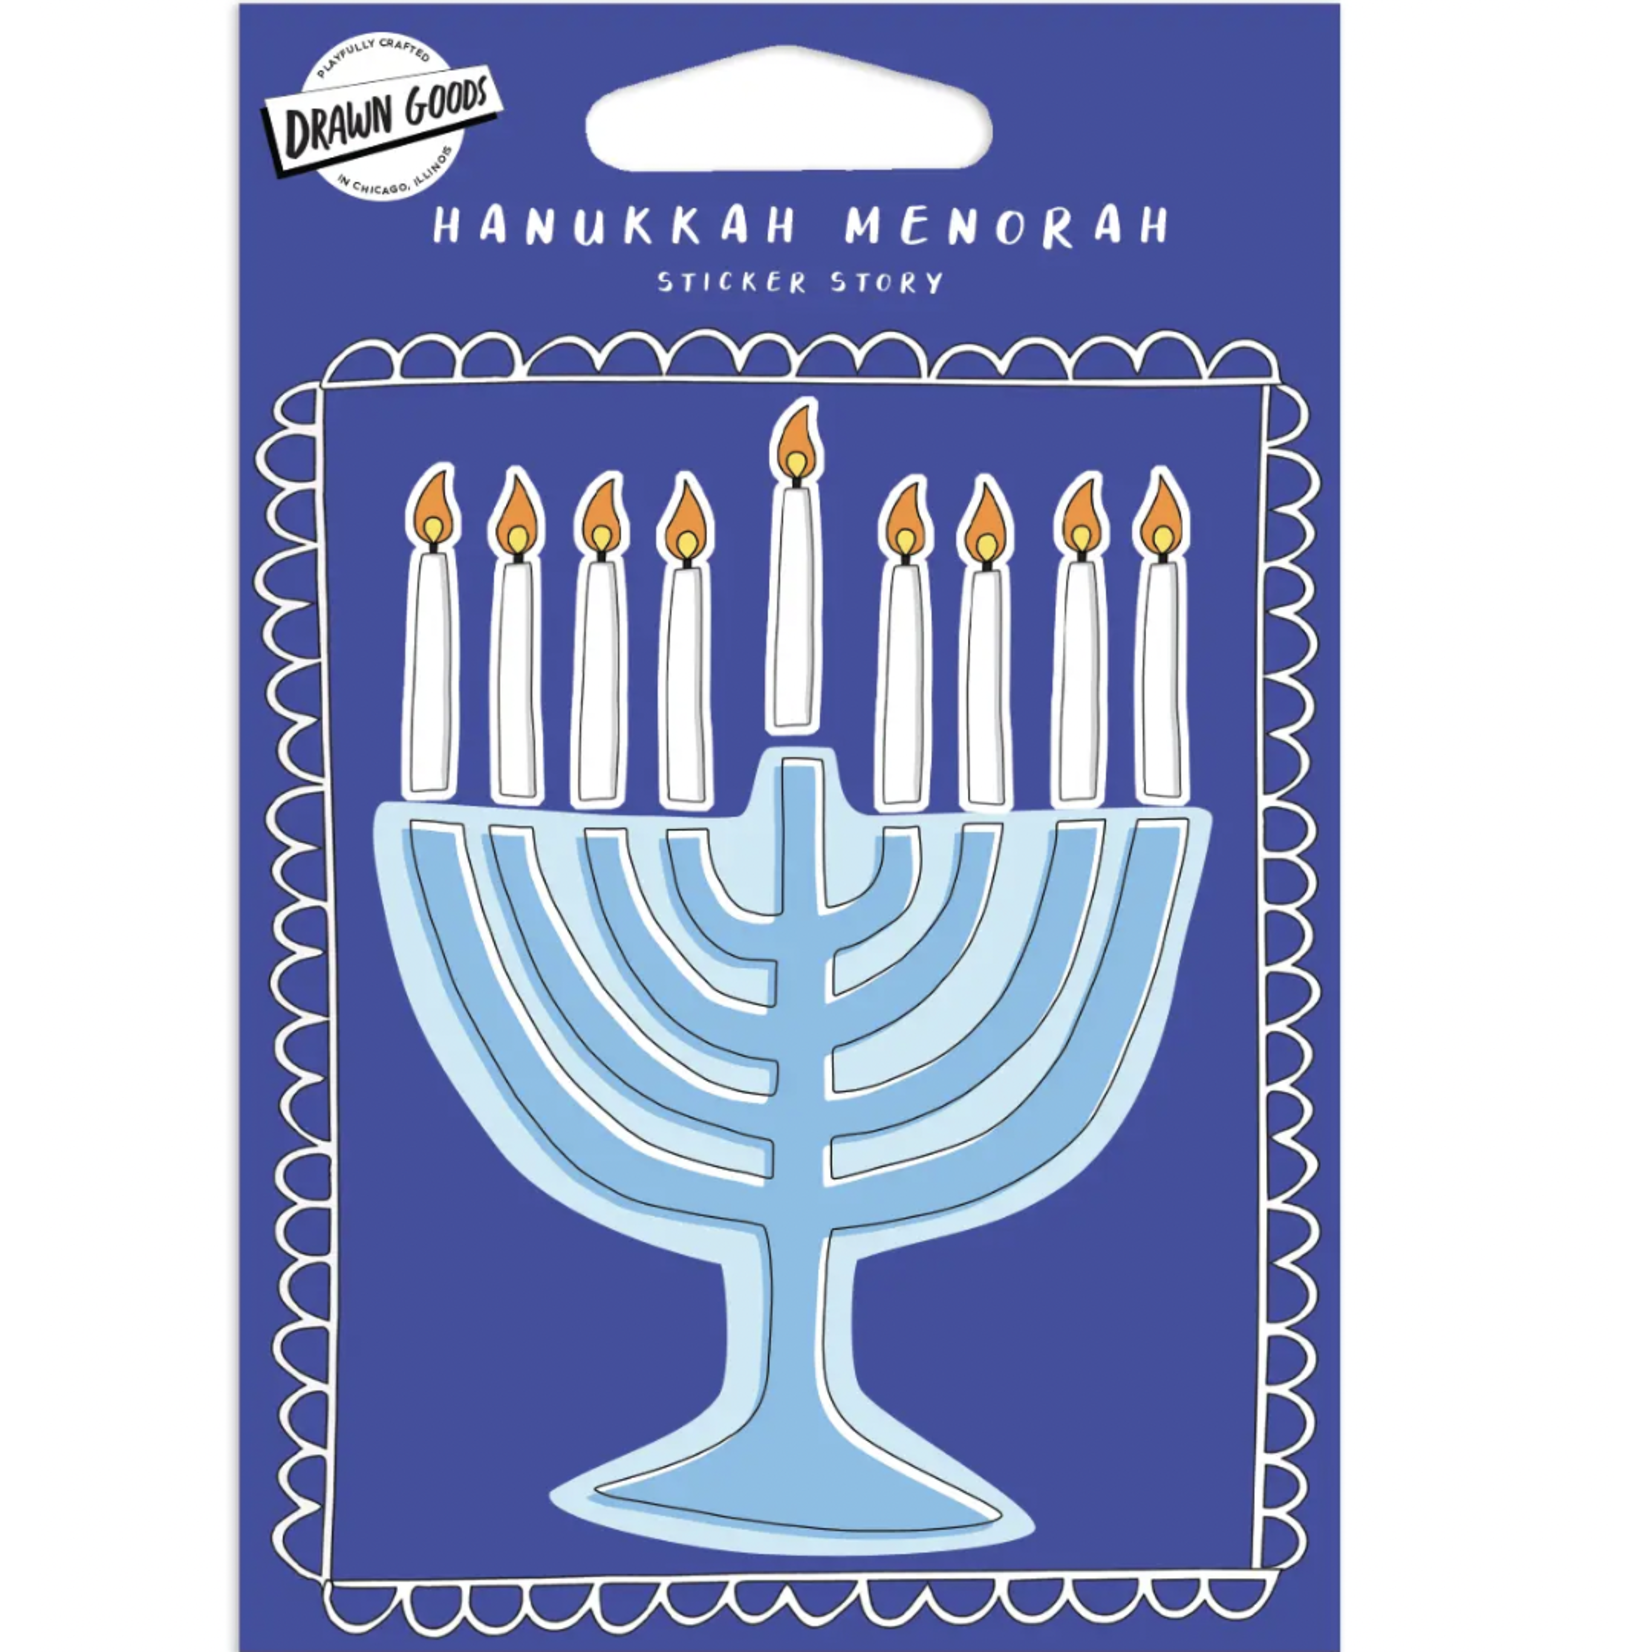 Drawn Goods Hanukkah Menorah - Sticker Story